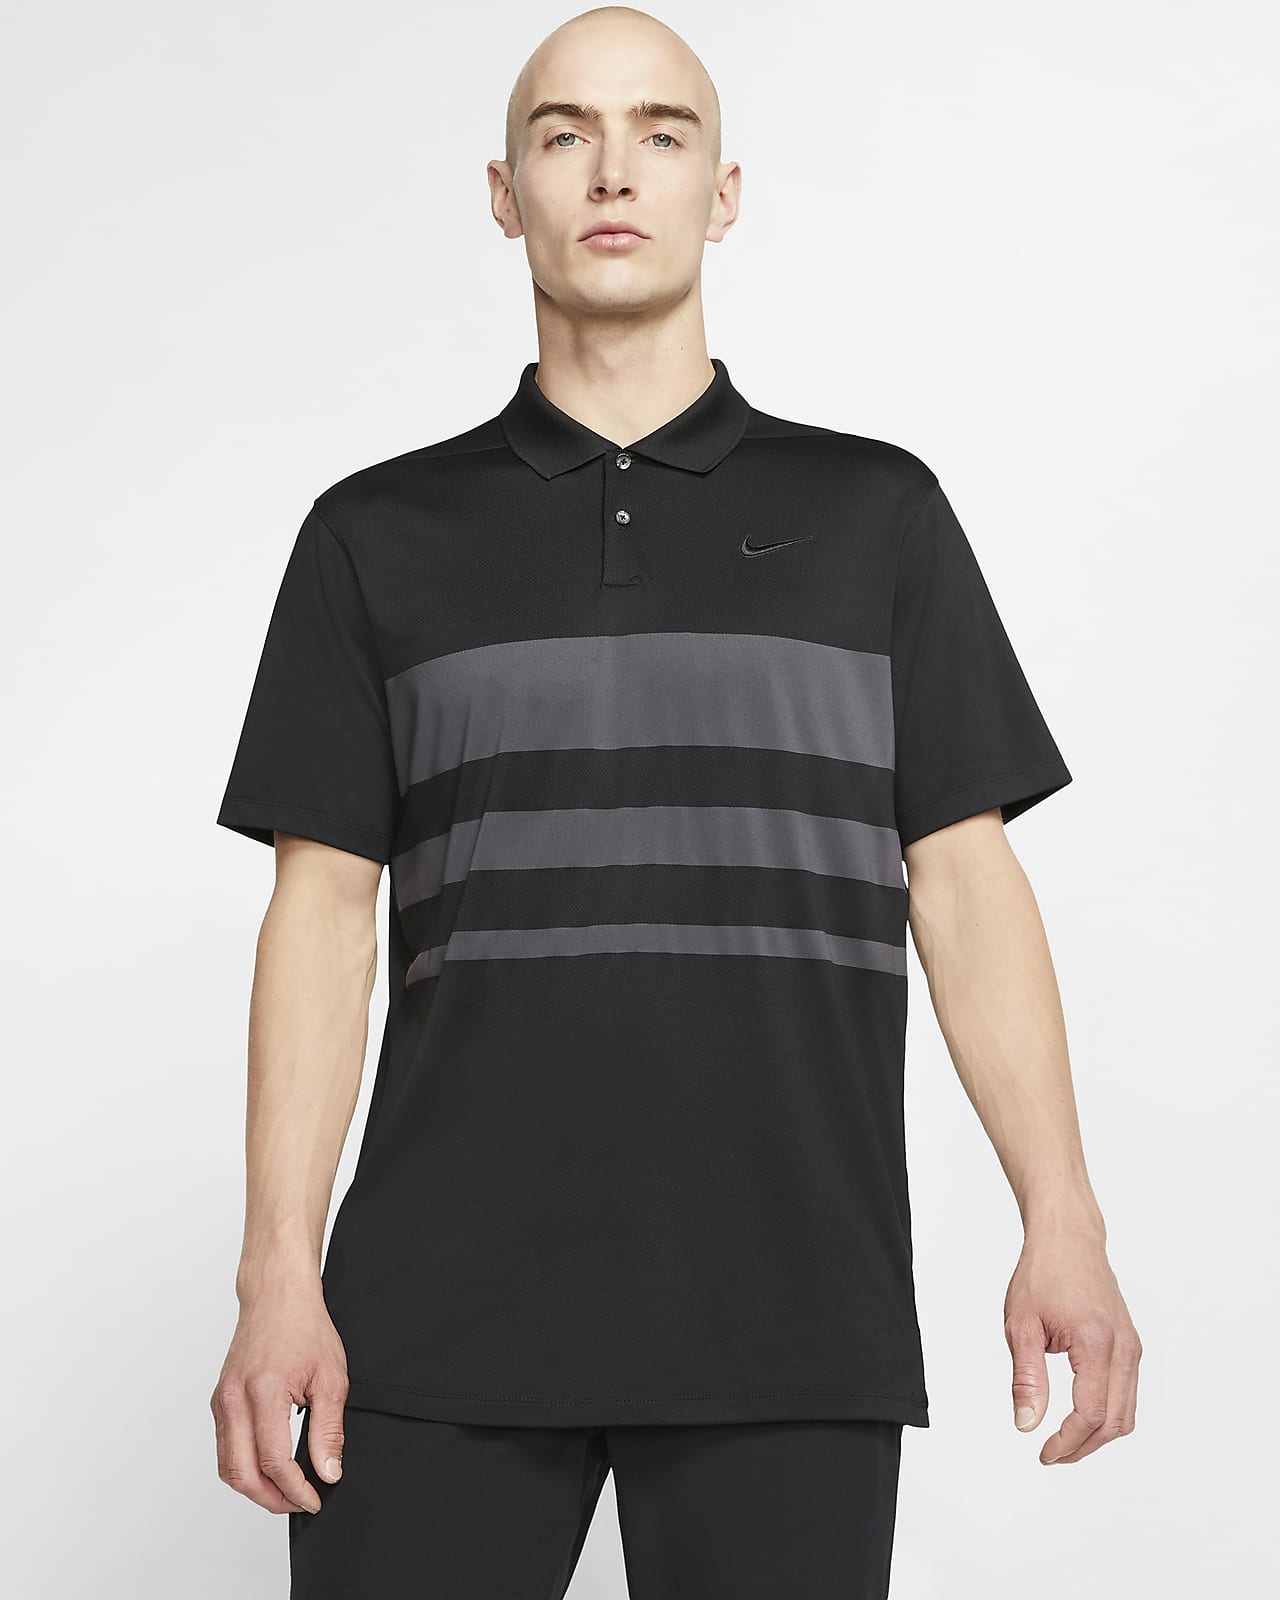 Nike Dri-FIT Vapor Men's Striped Golf 